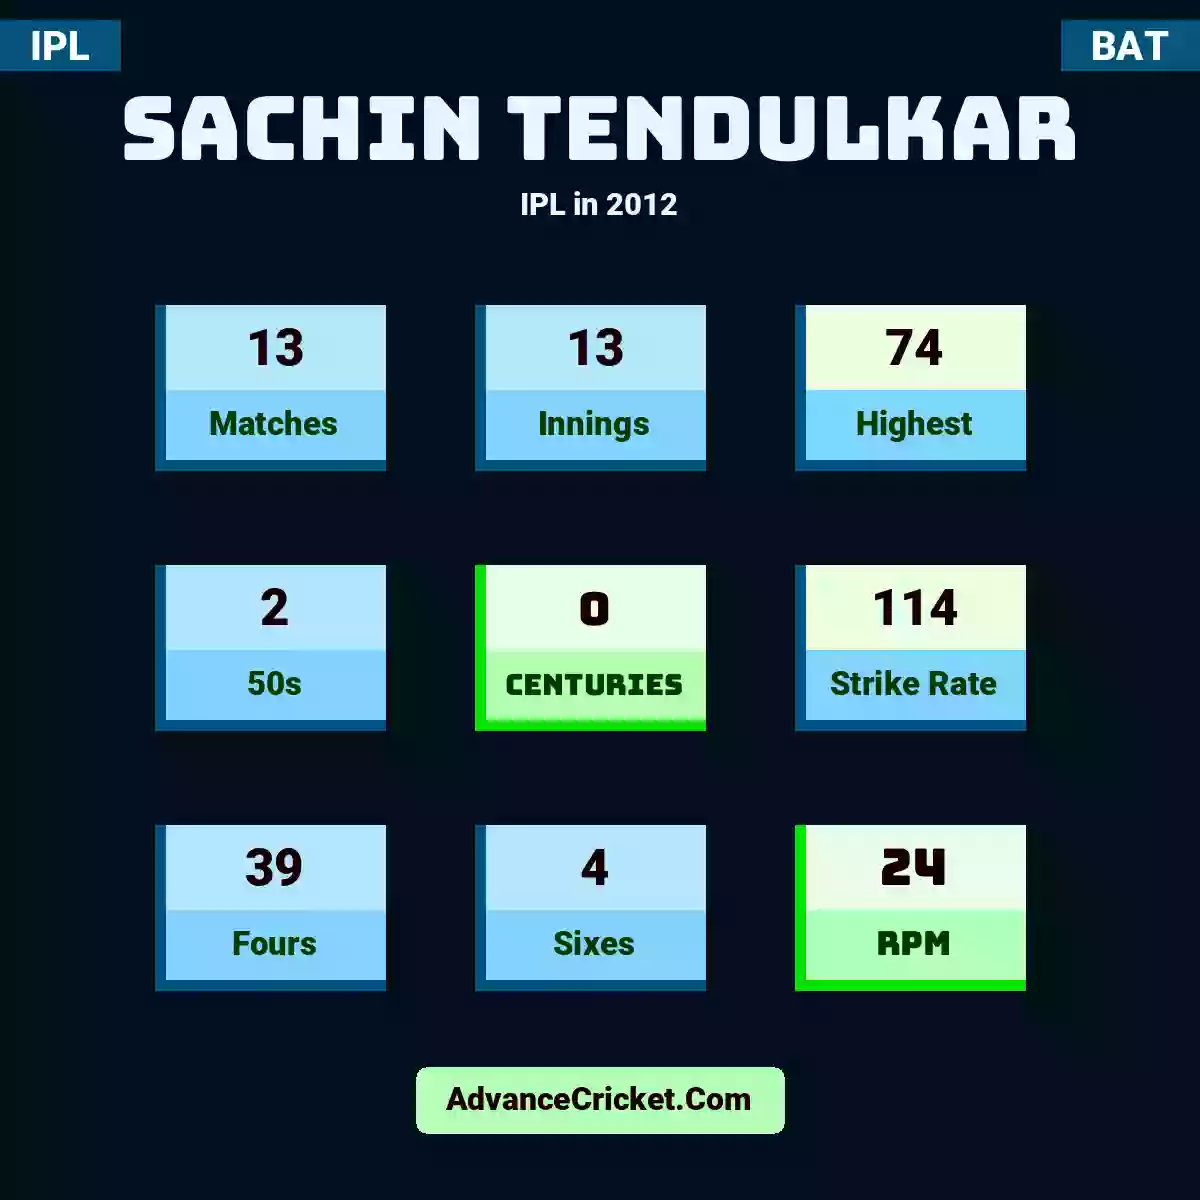 Sachin Tendulkar IPL  in 2012, Sachin Tendulkar played 13 matches, scored 74 runs as highest, 2 half-centuries, and 0 centuries, with a strike rate of 114. S.Tendulkar hit 39 fours and 4 sixes, with an RPM of 24.